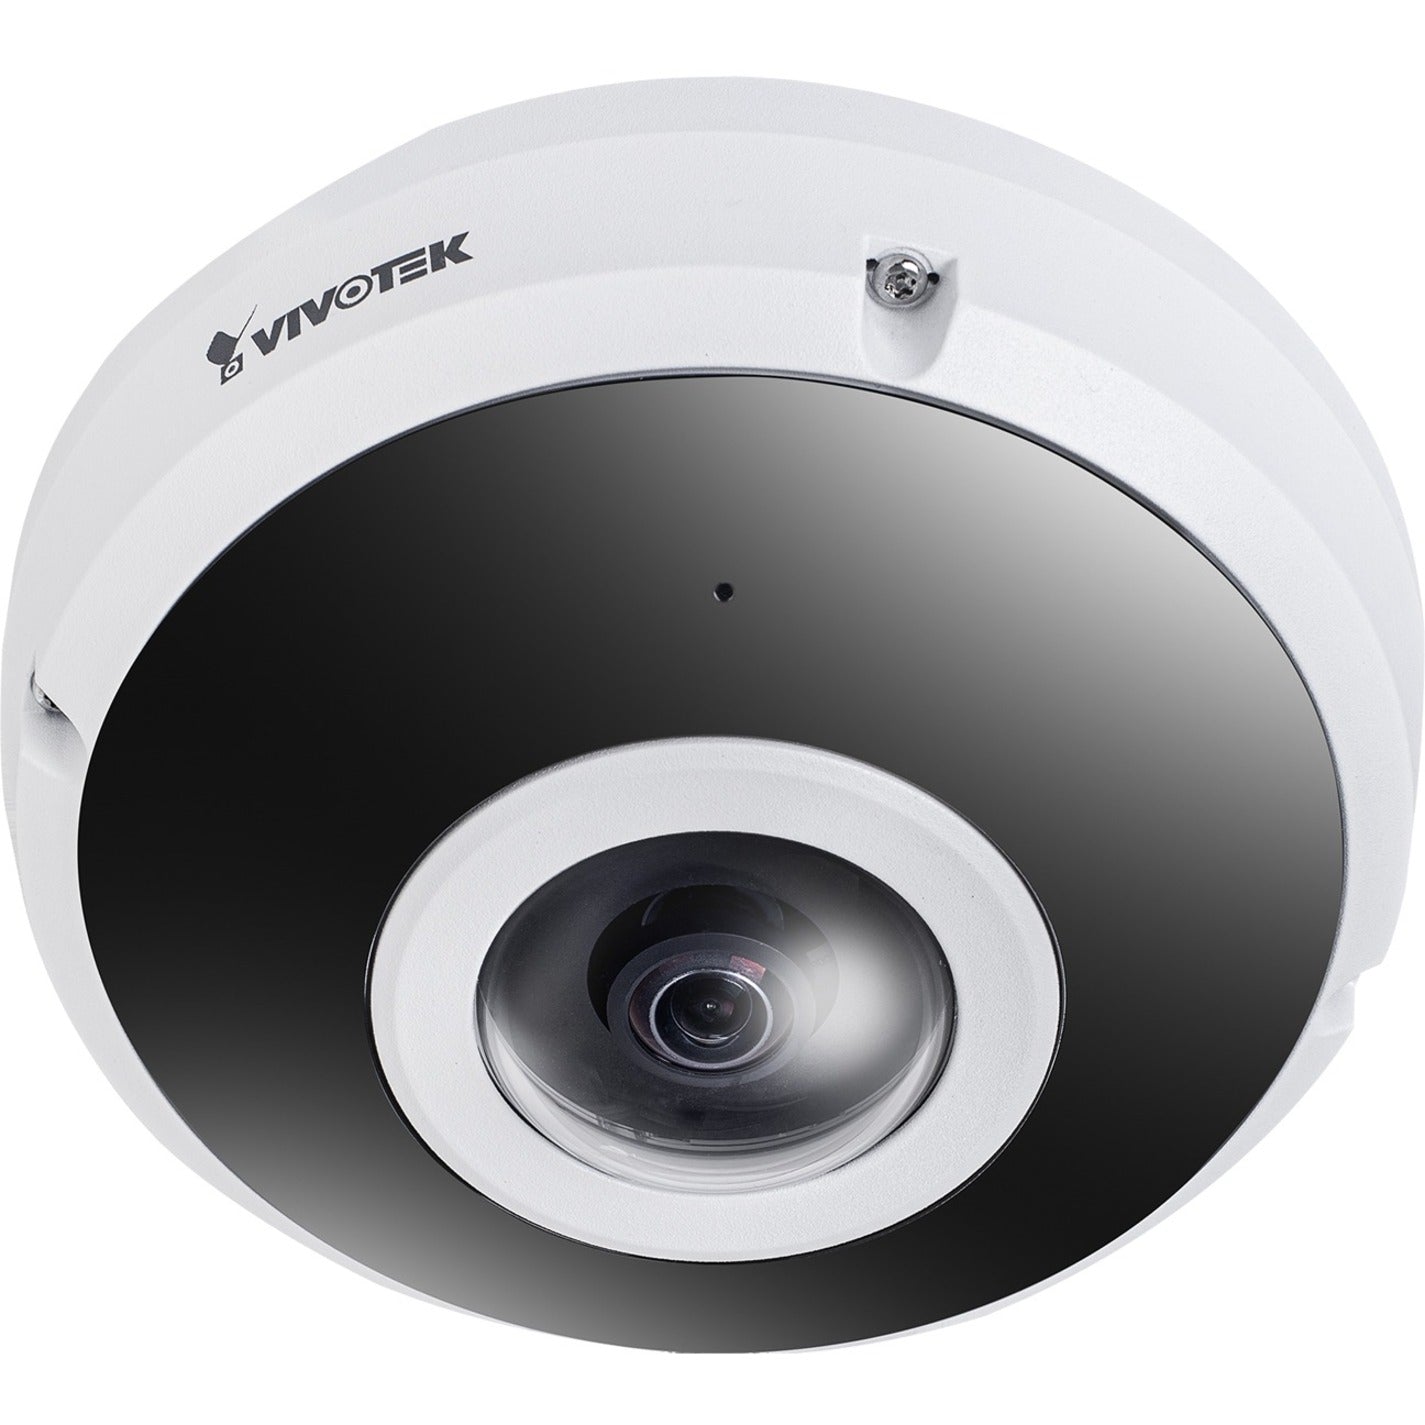 Vivotek FE9382-EHV-V2 Fisheye Network Camera, 6 Megapixel HD, 180° Field of View, H.265 Video, IP66 Weatherproof